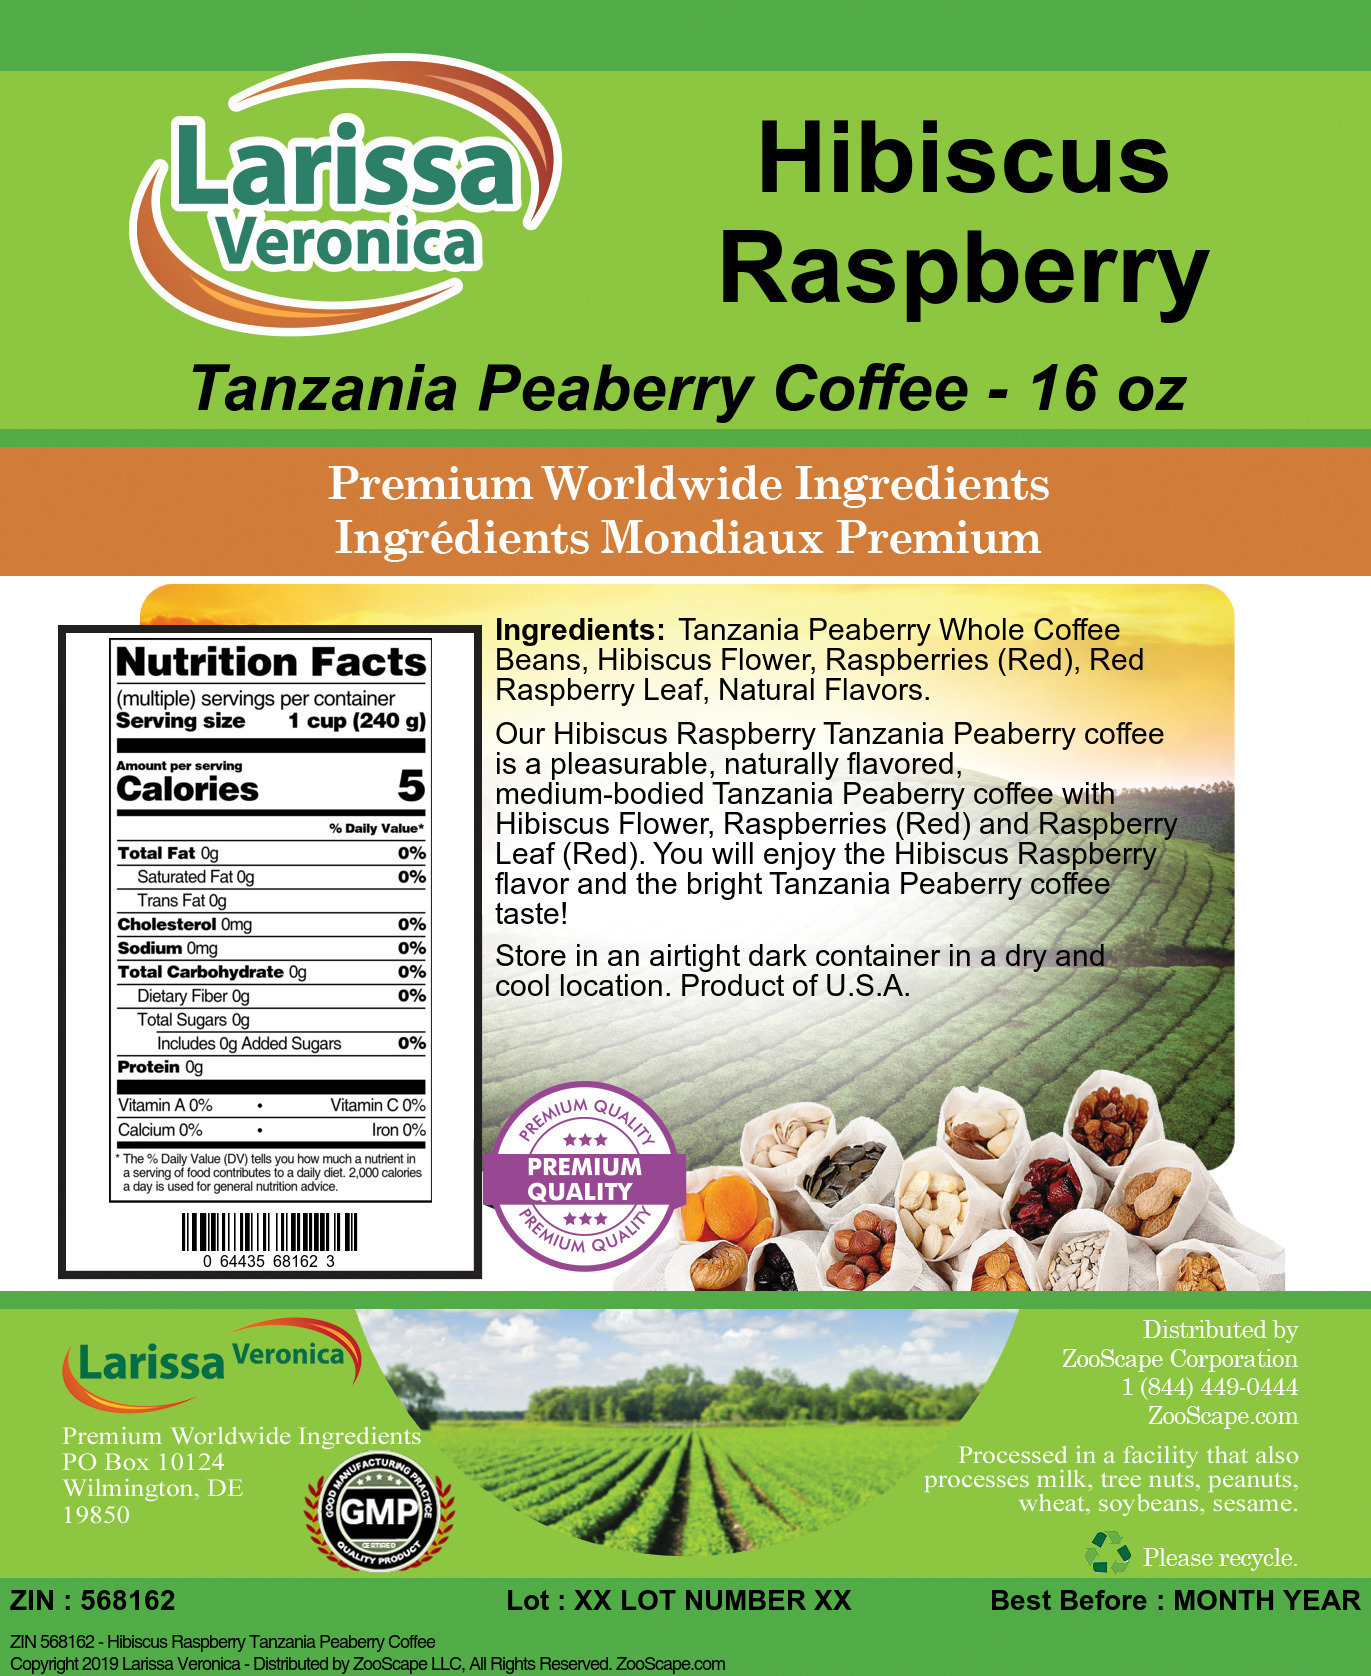 Hibiscus Raspberry Tanzania Peaberry Coffee - Label